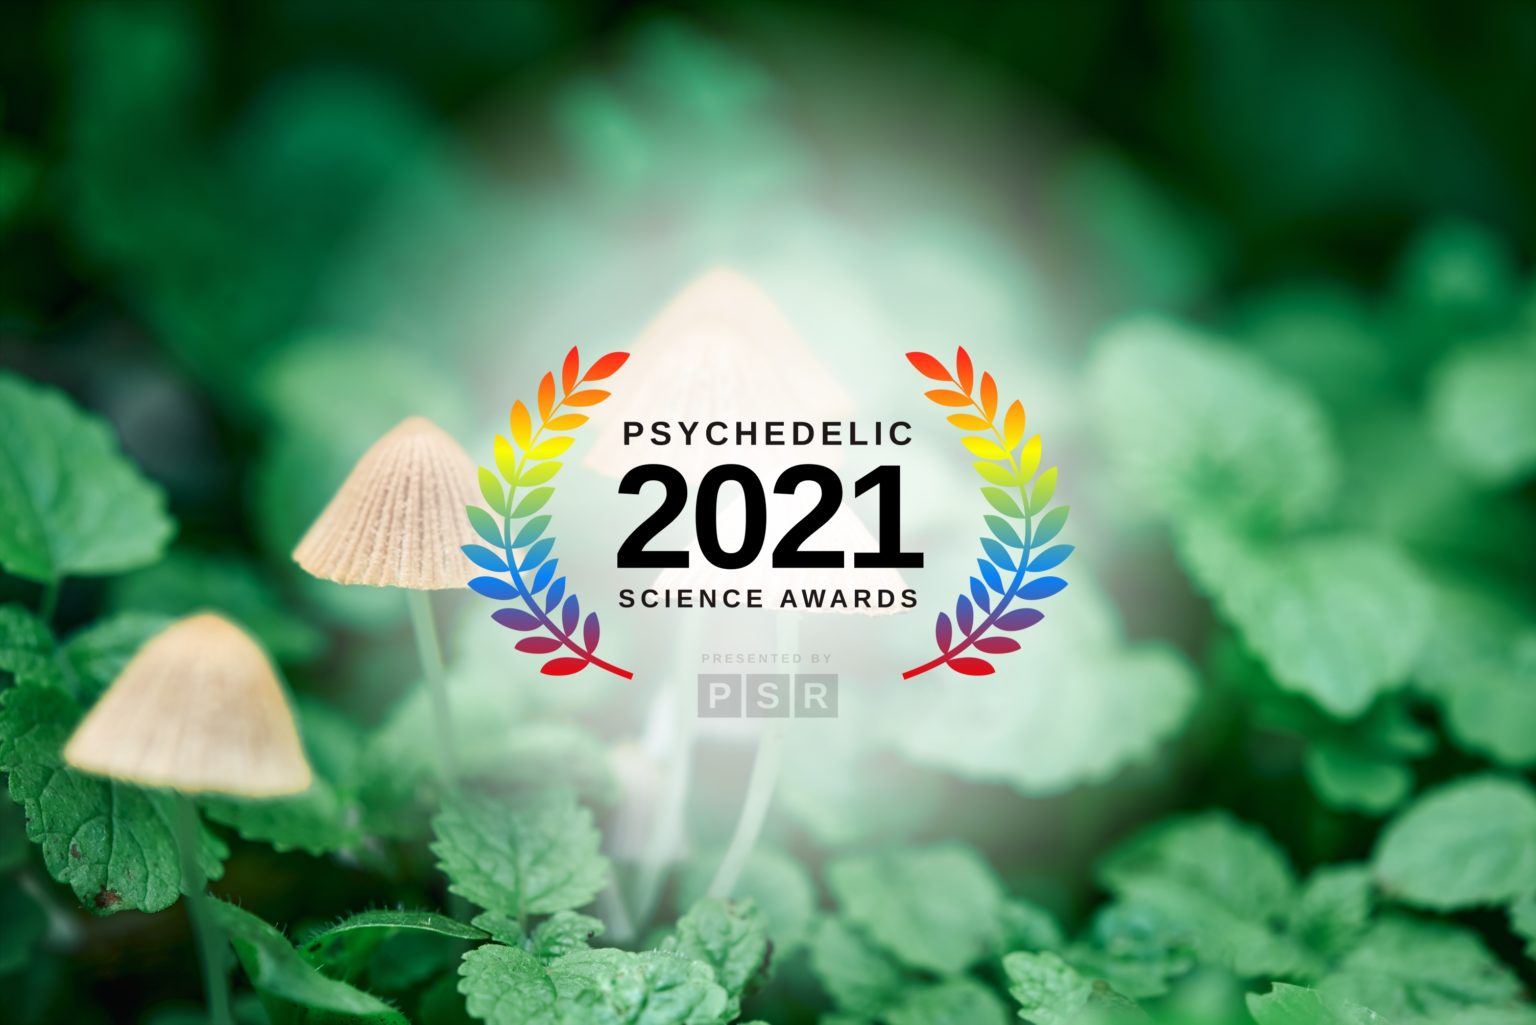 2021-Psychedelic-Science-Awards-1-1536x1025.jpg